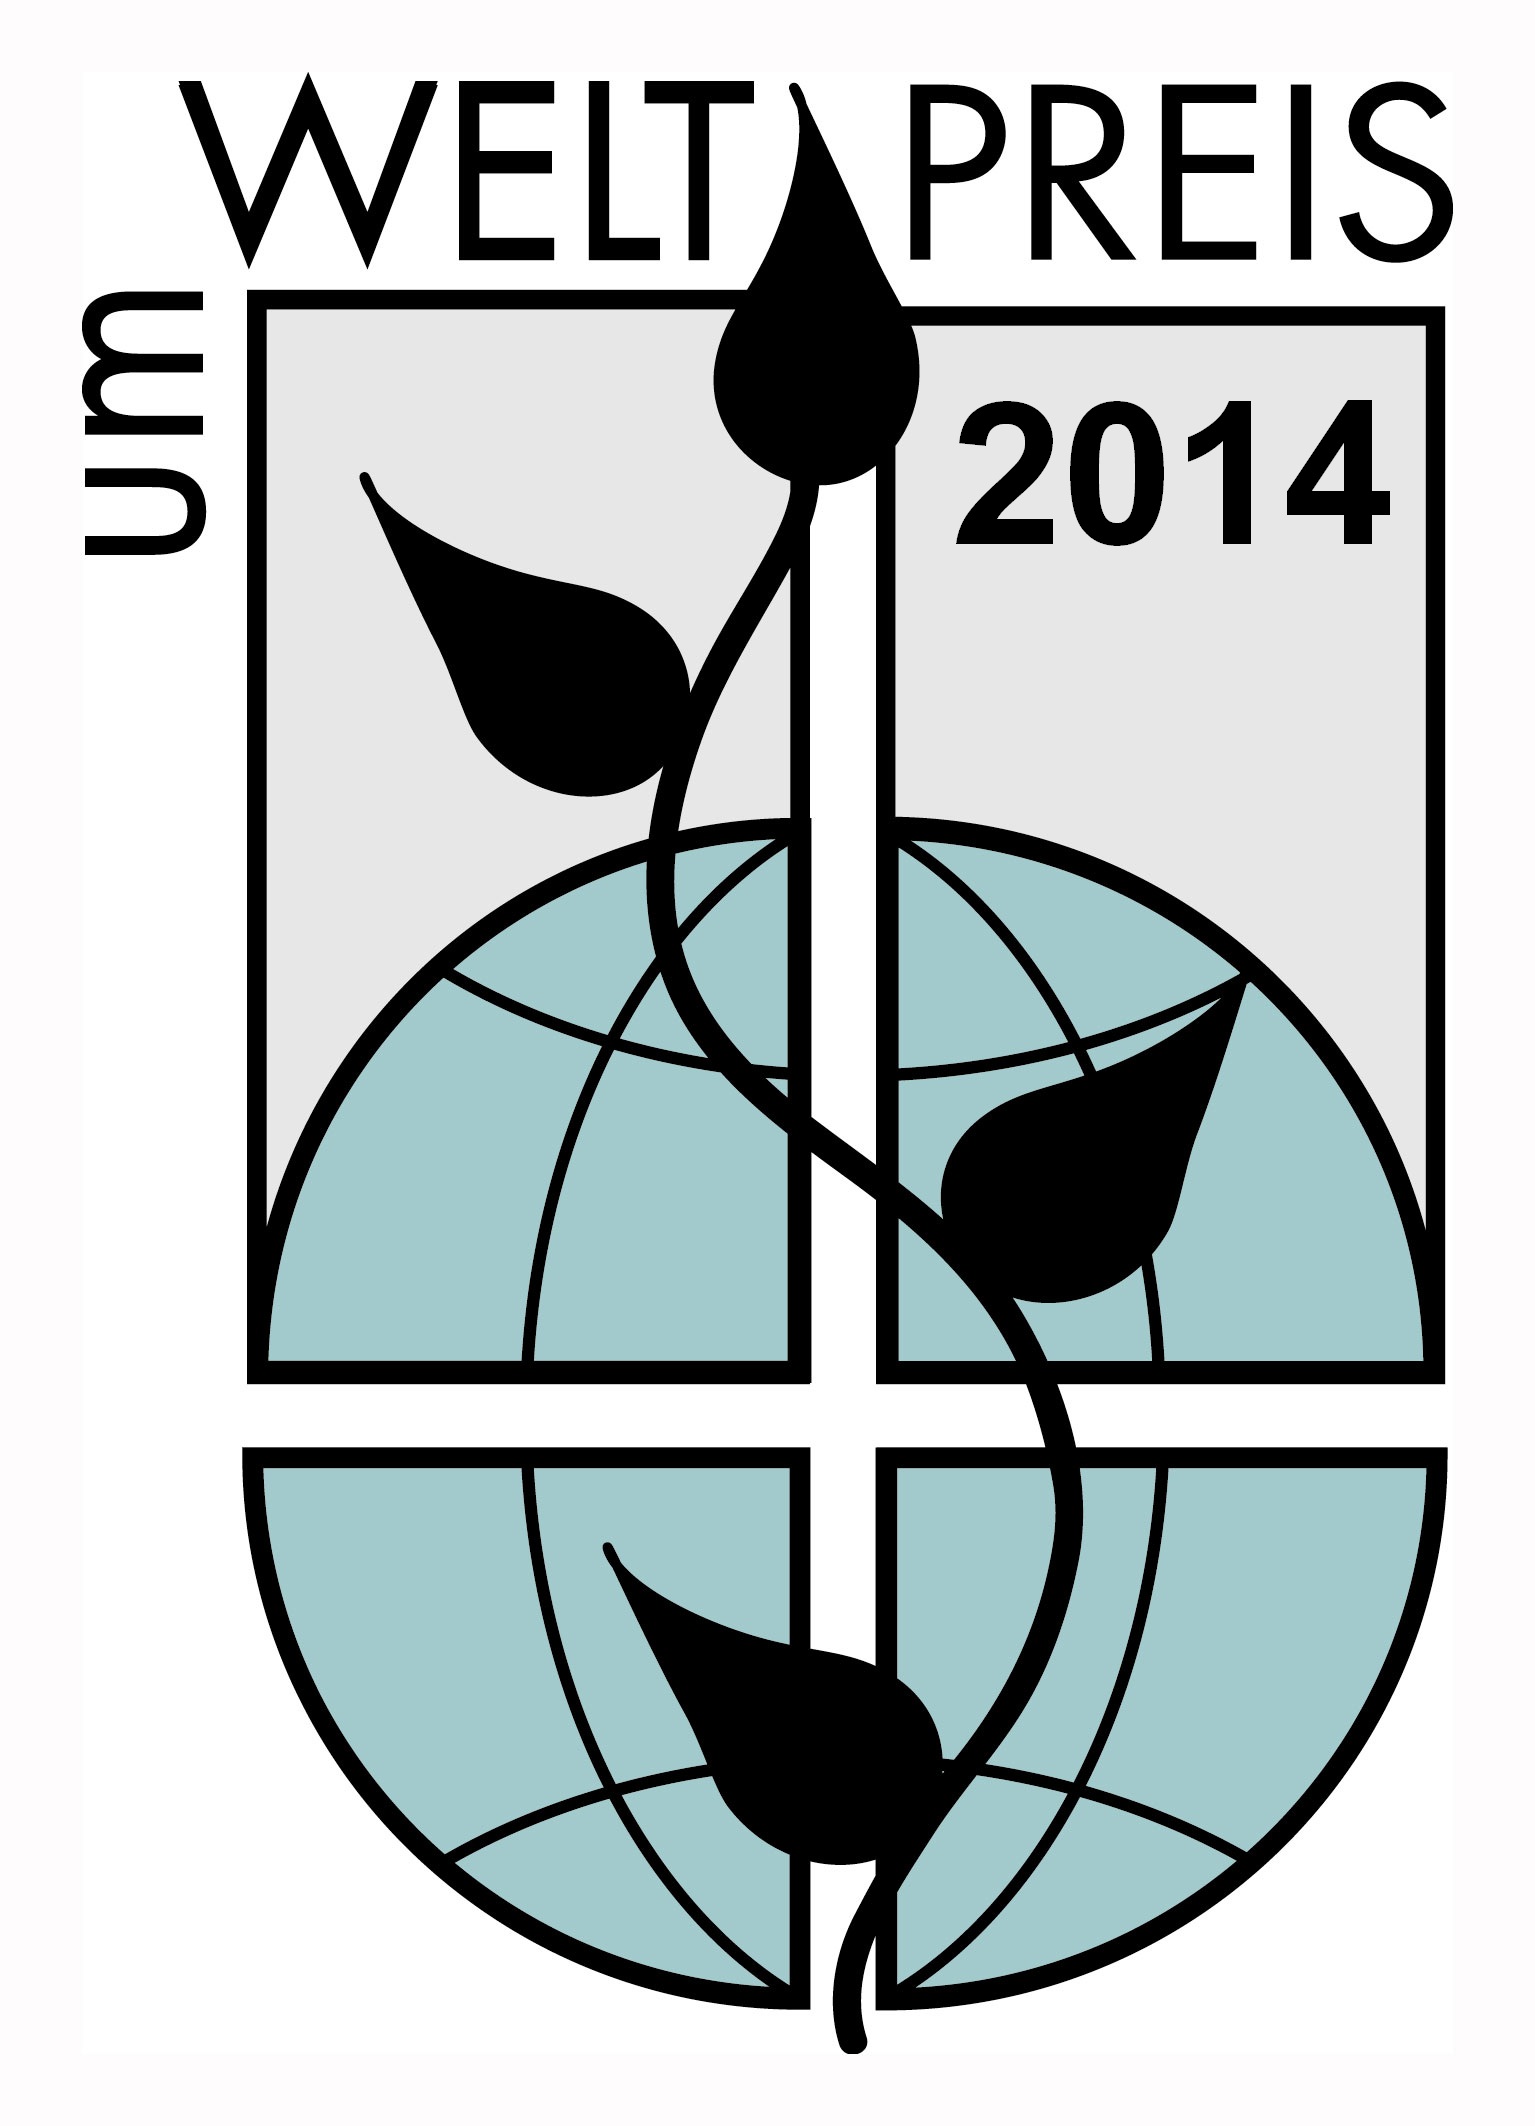 umWeltpreis 2014 logo